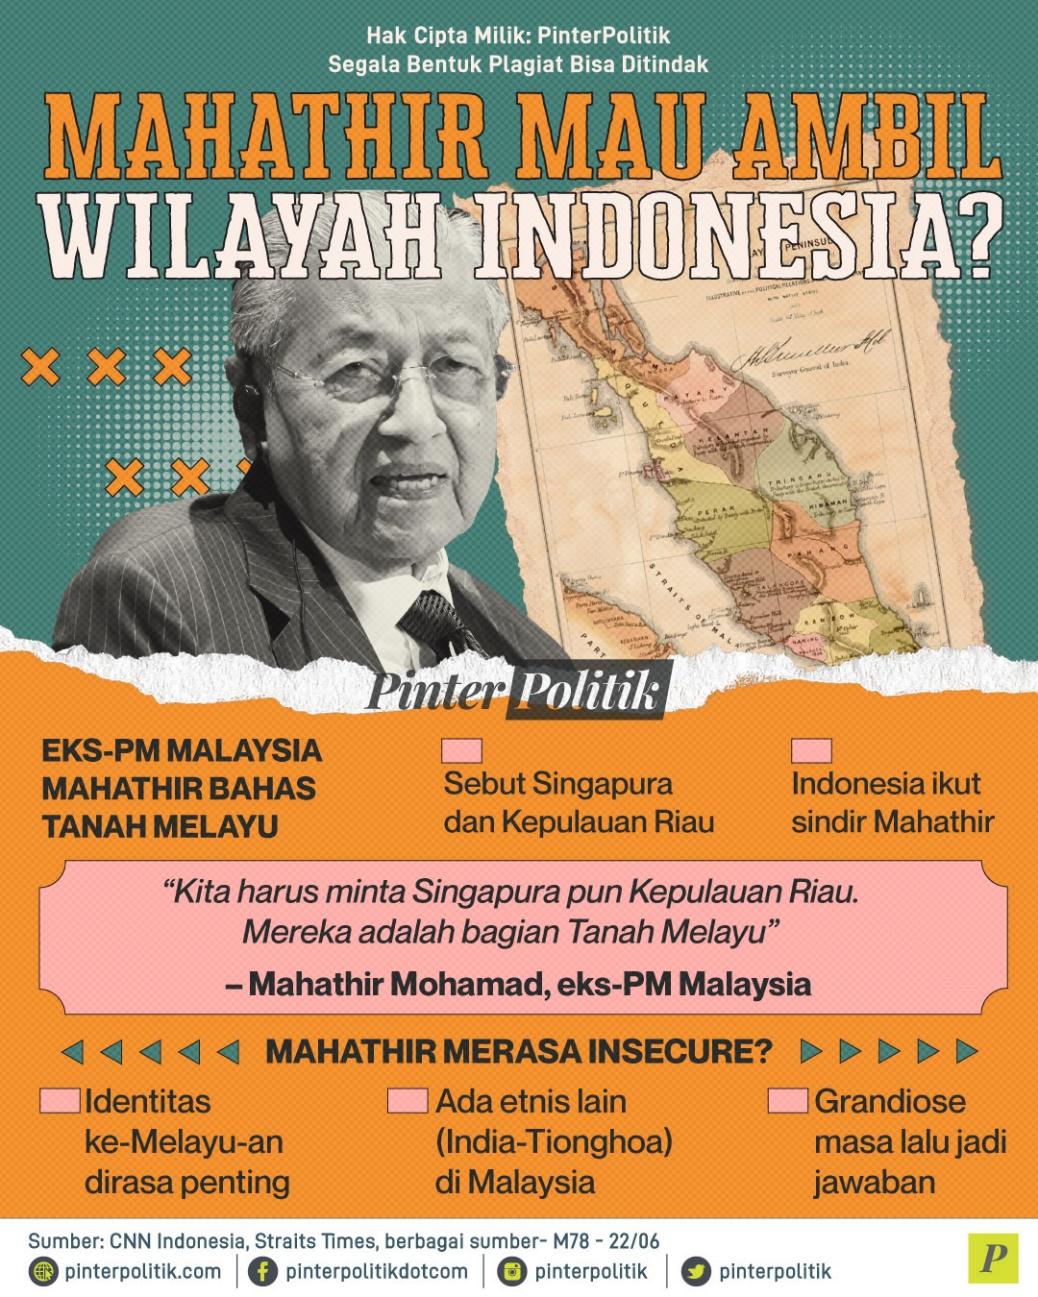 Mahathir Mau Ambil Wilayah Indonesia